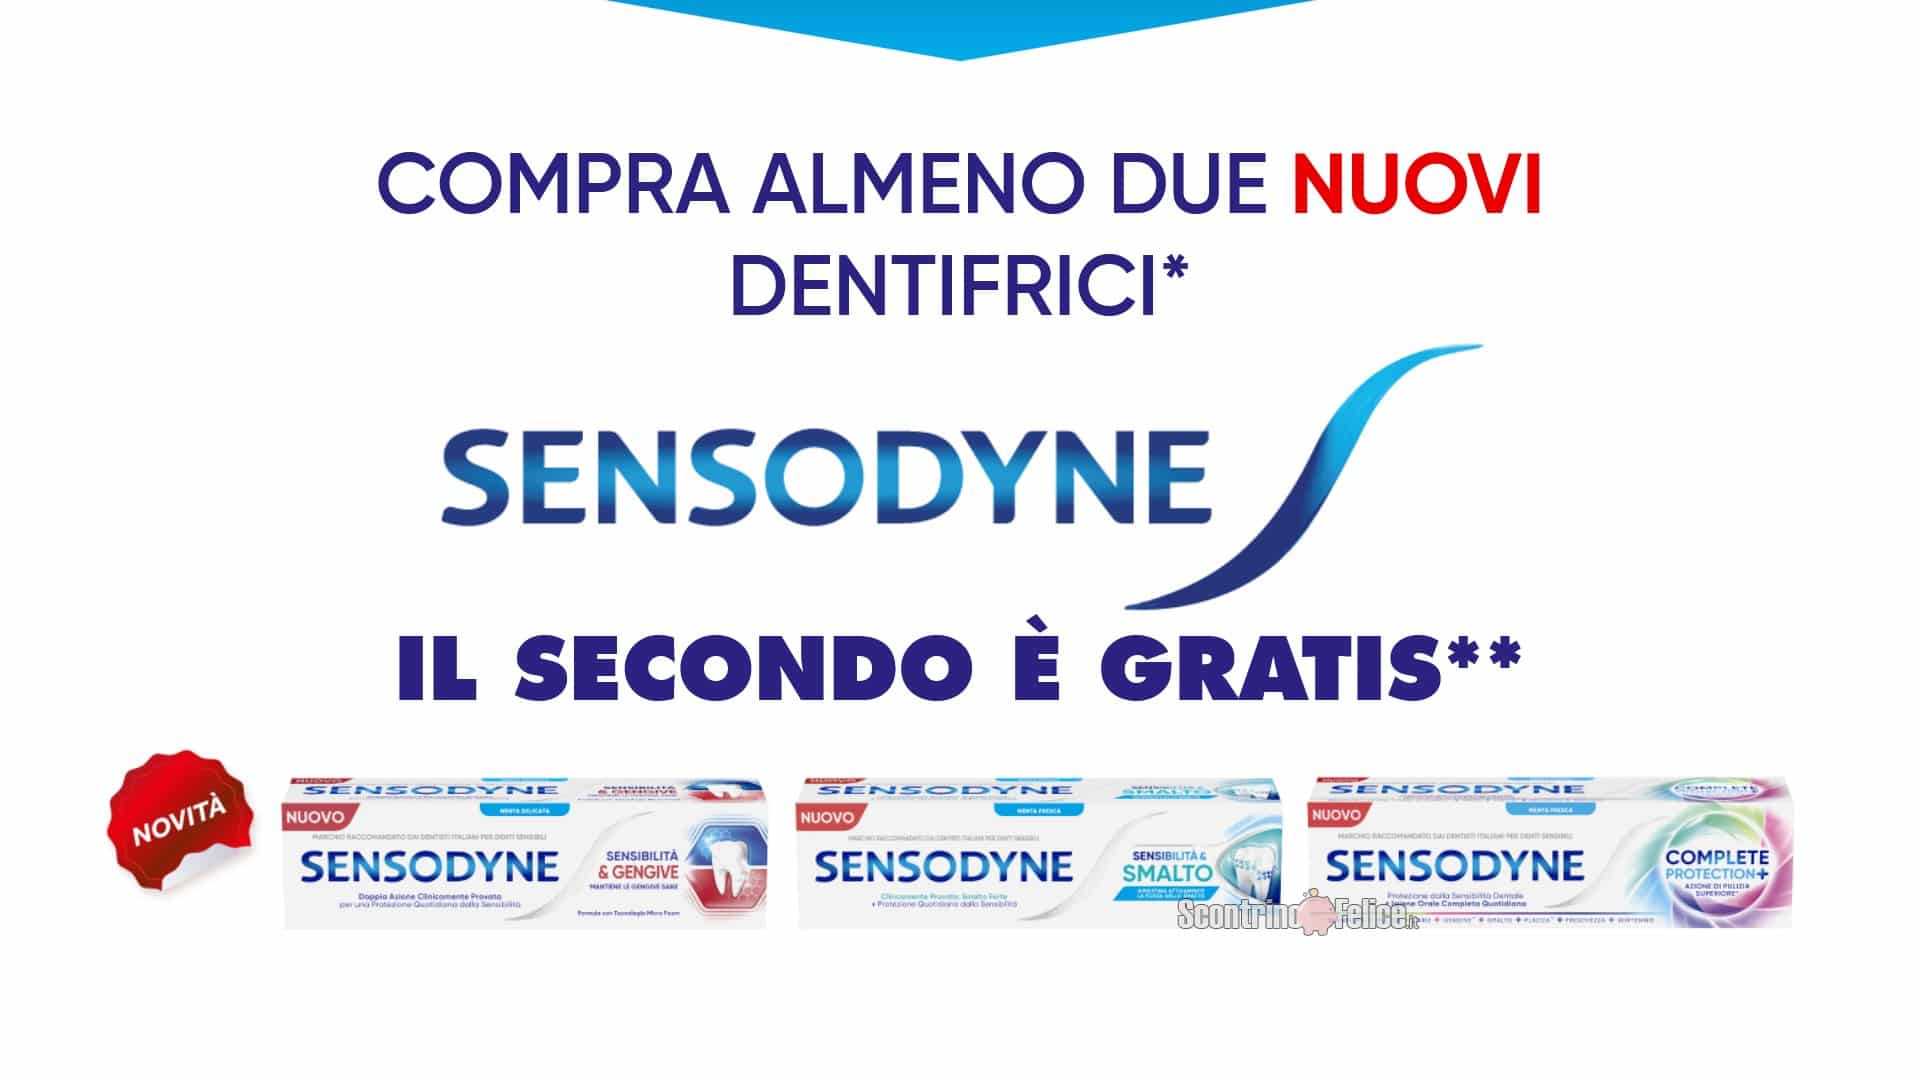 Cashback Sensodyne: ricevi il rimborso del dentifricio meno caro